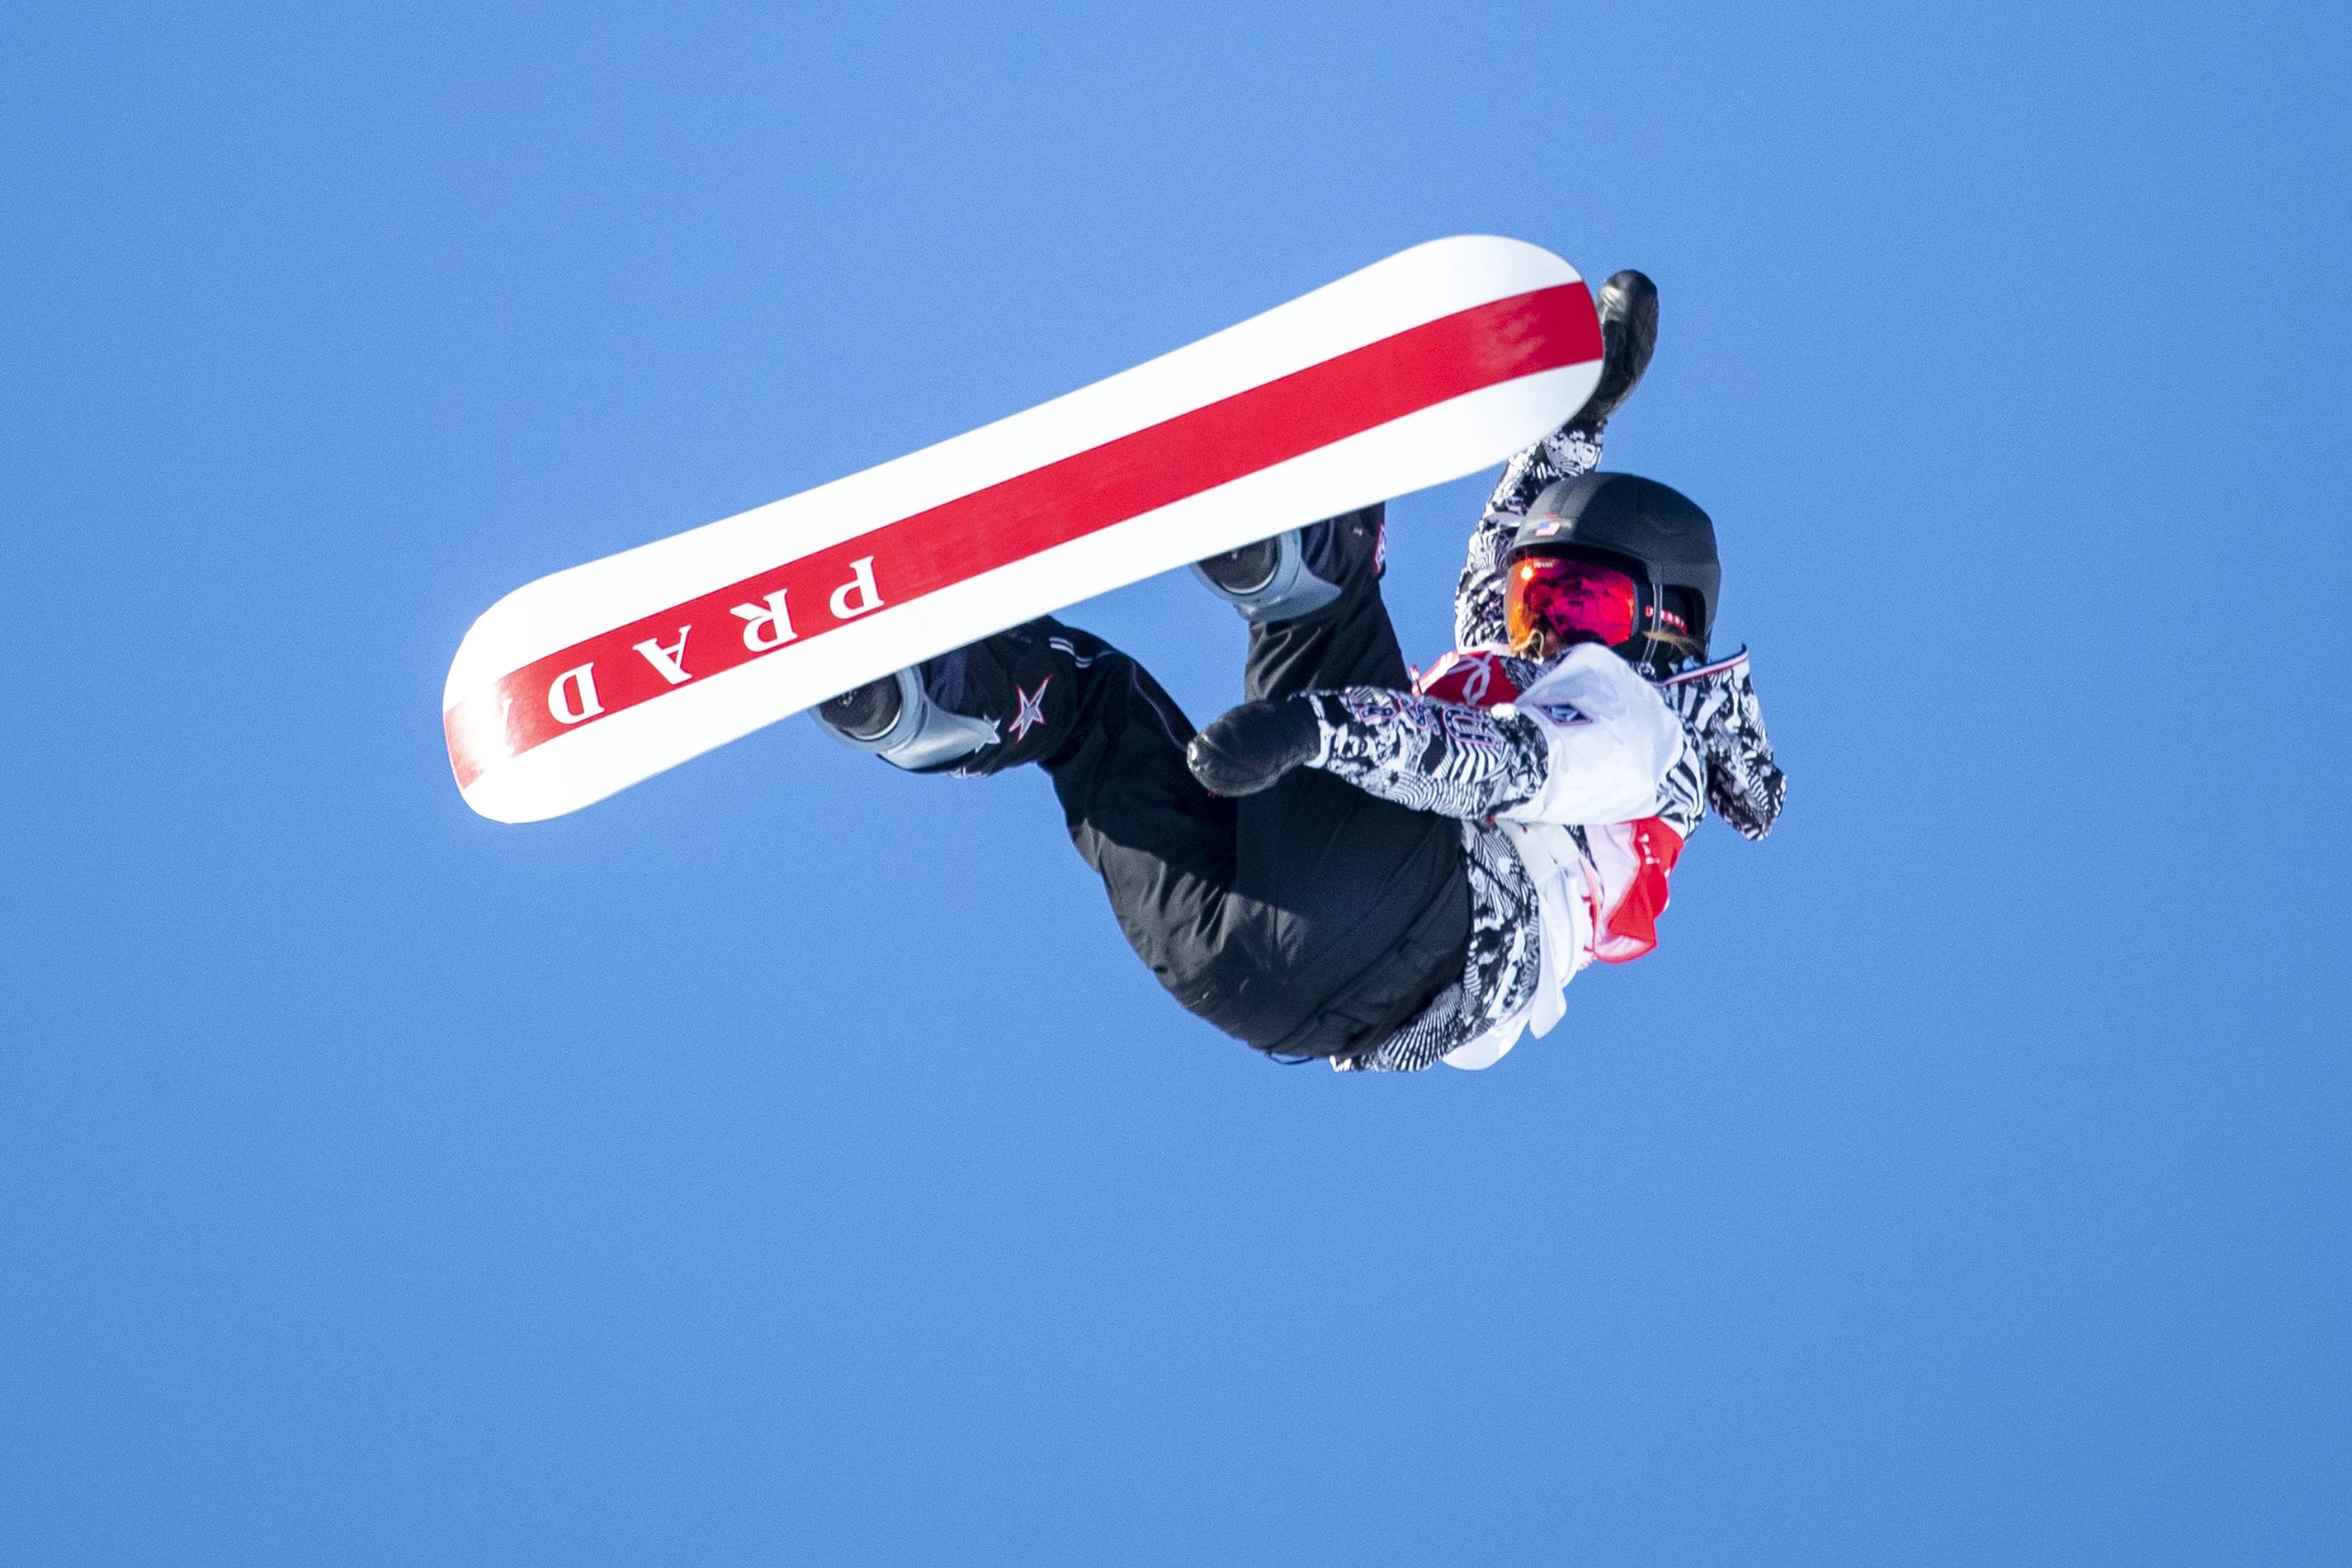 Julia Marino snowboards with Prada at the Olympics in Beijing 2022